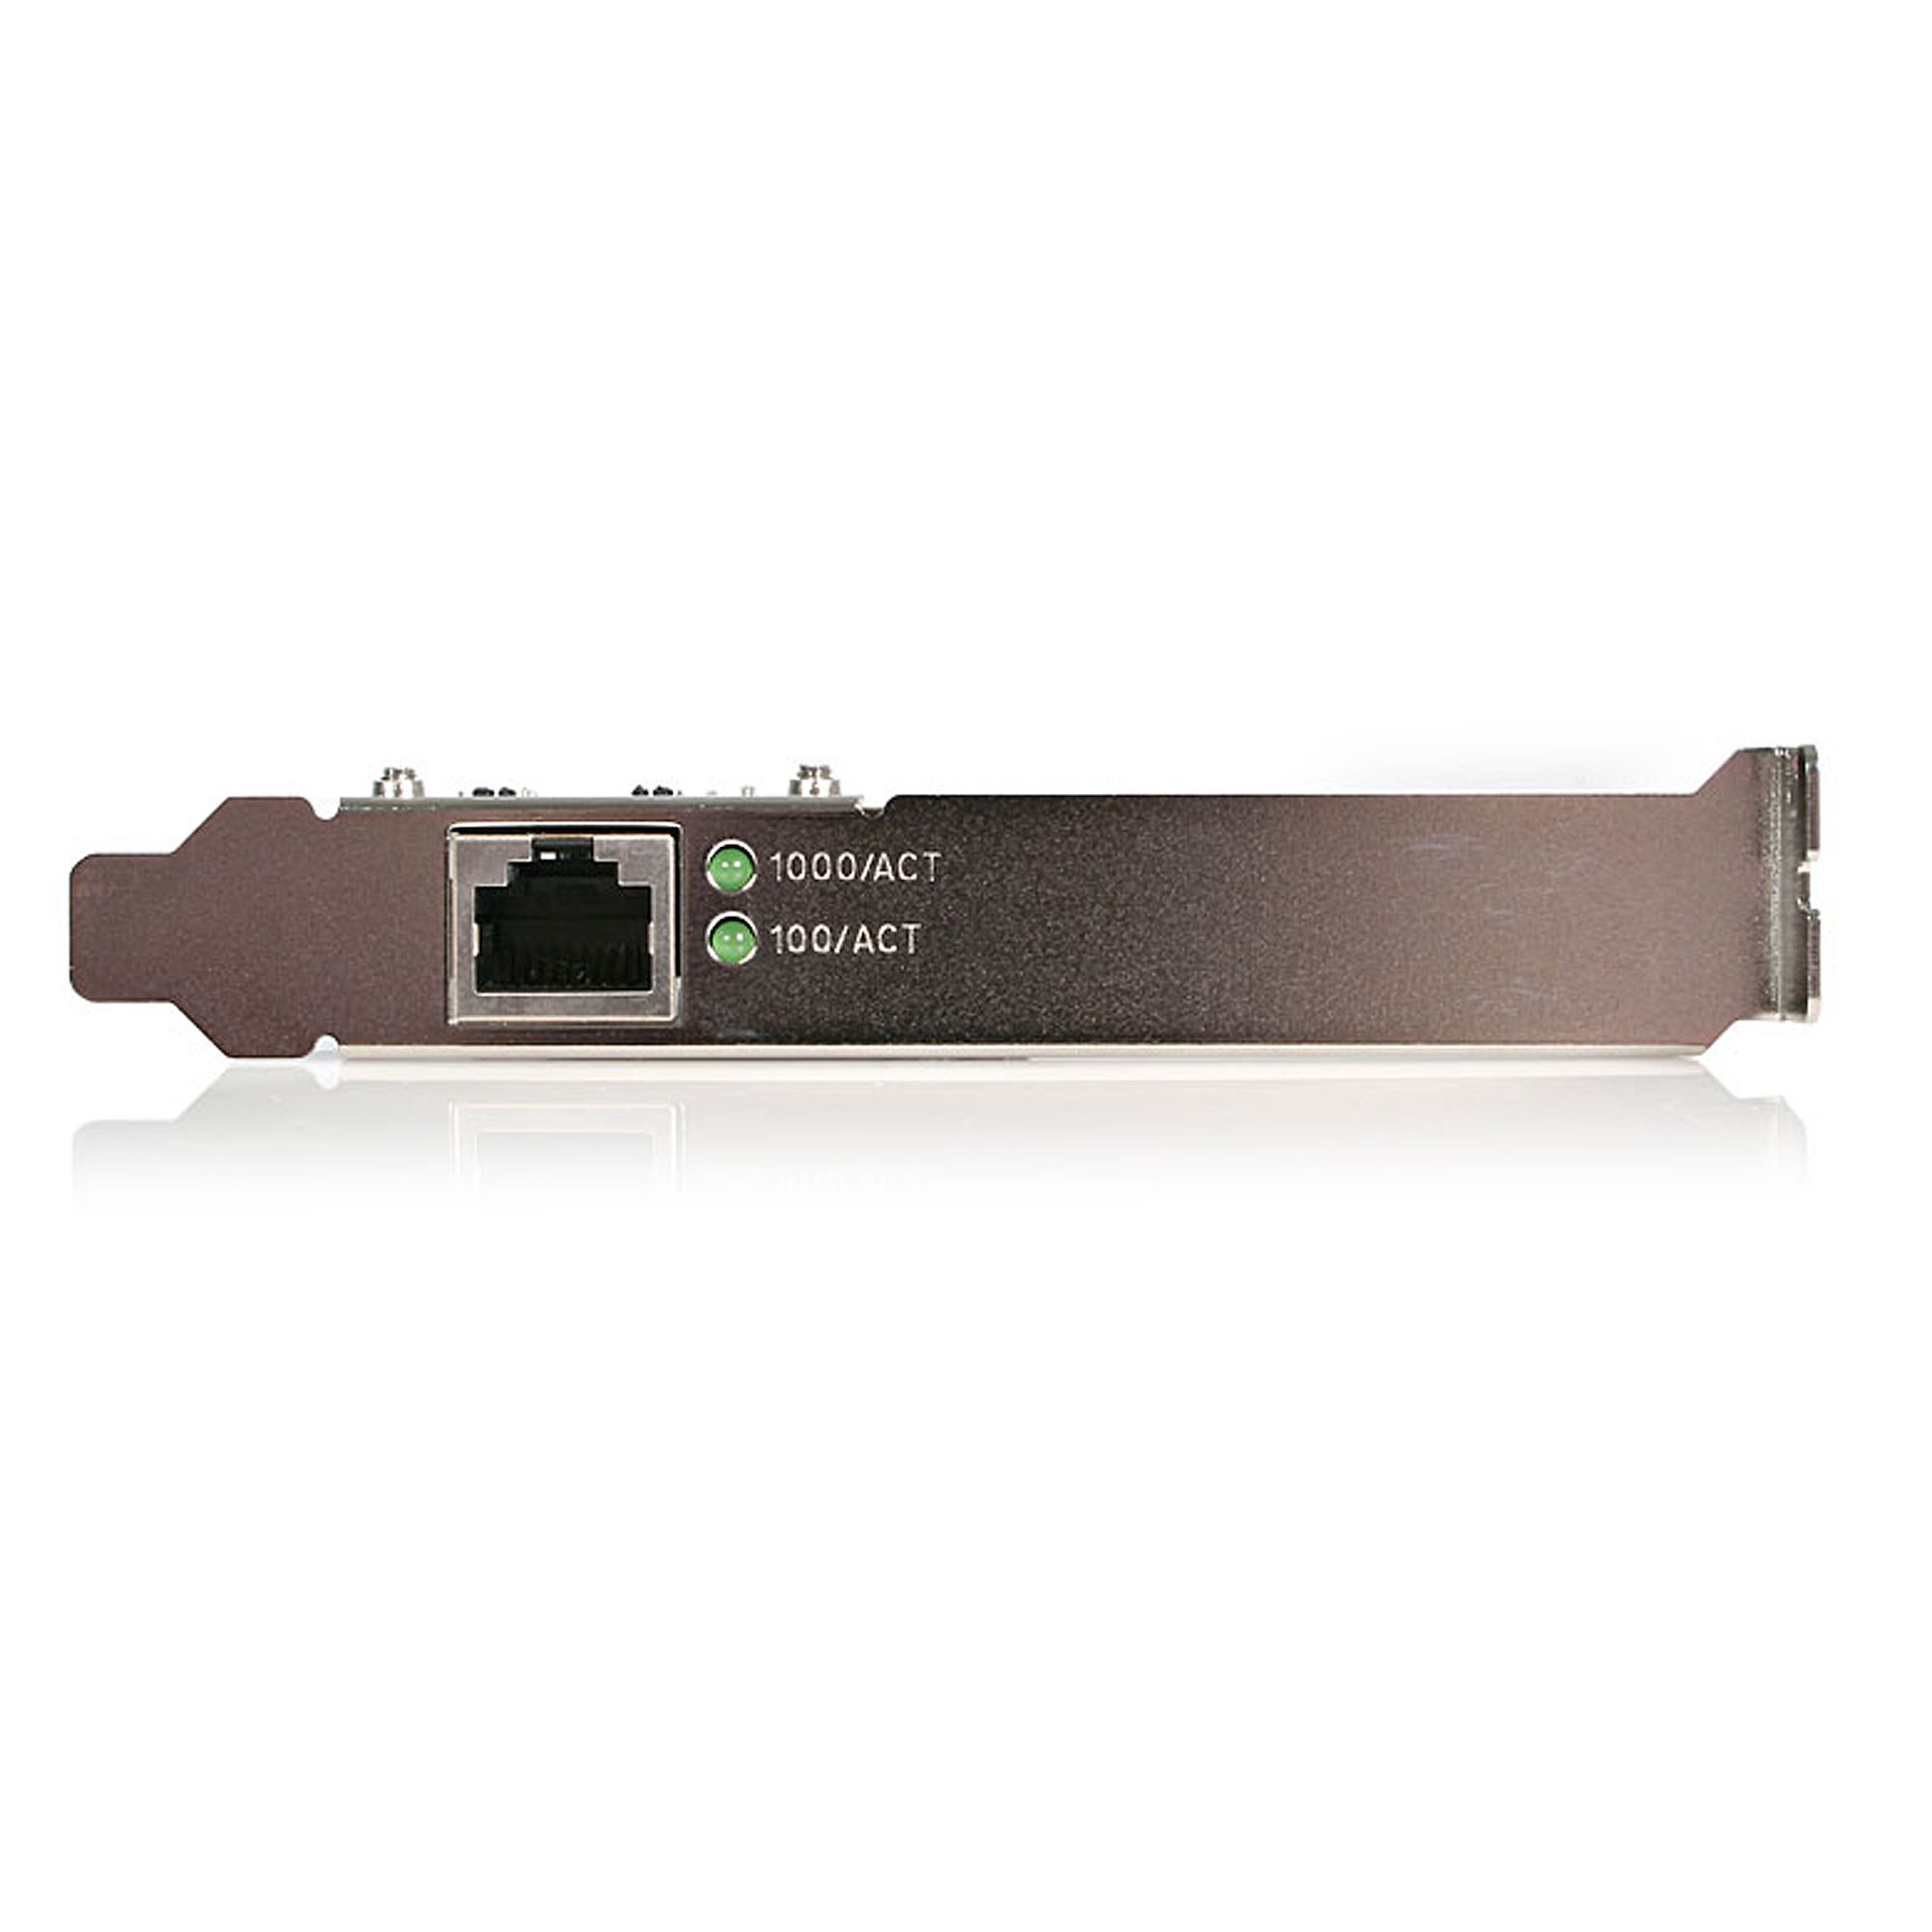 1 Port PCI Gigabit Ethernet Adapter Card - Network Adapter Cards